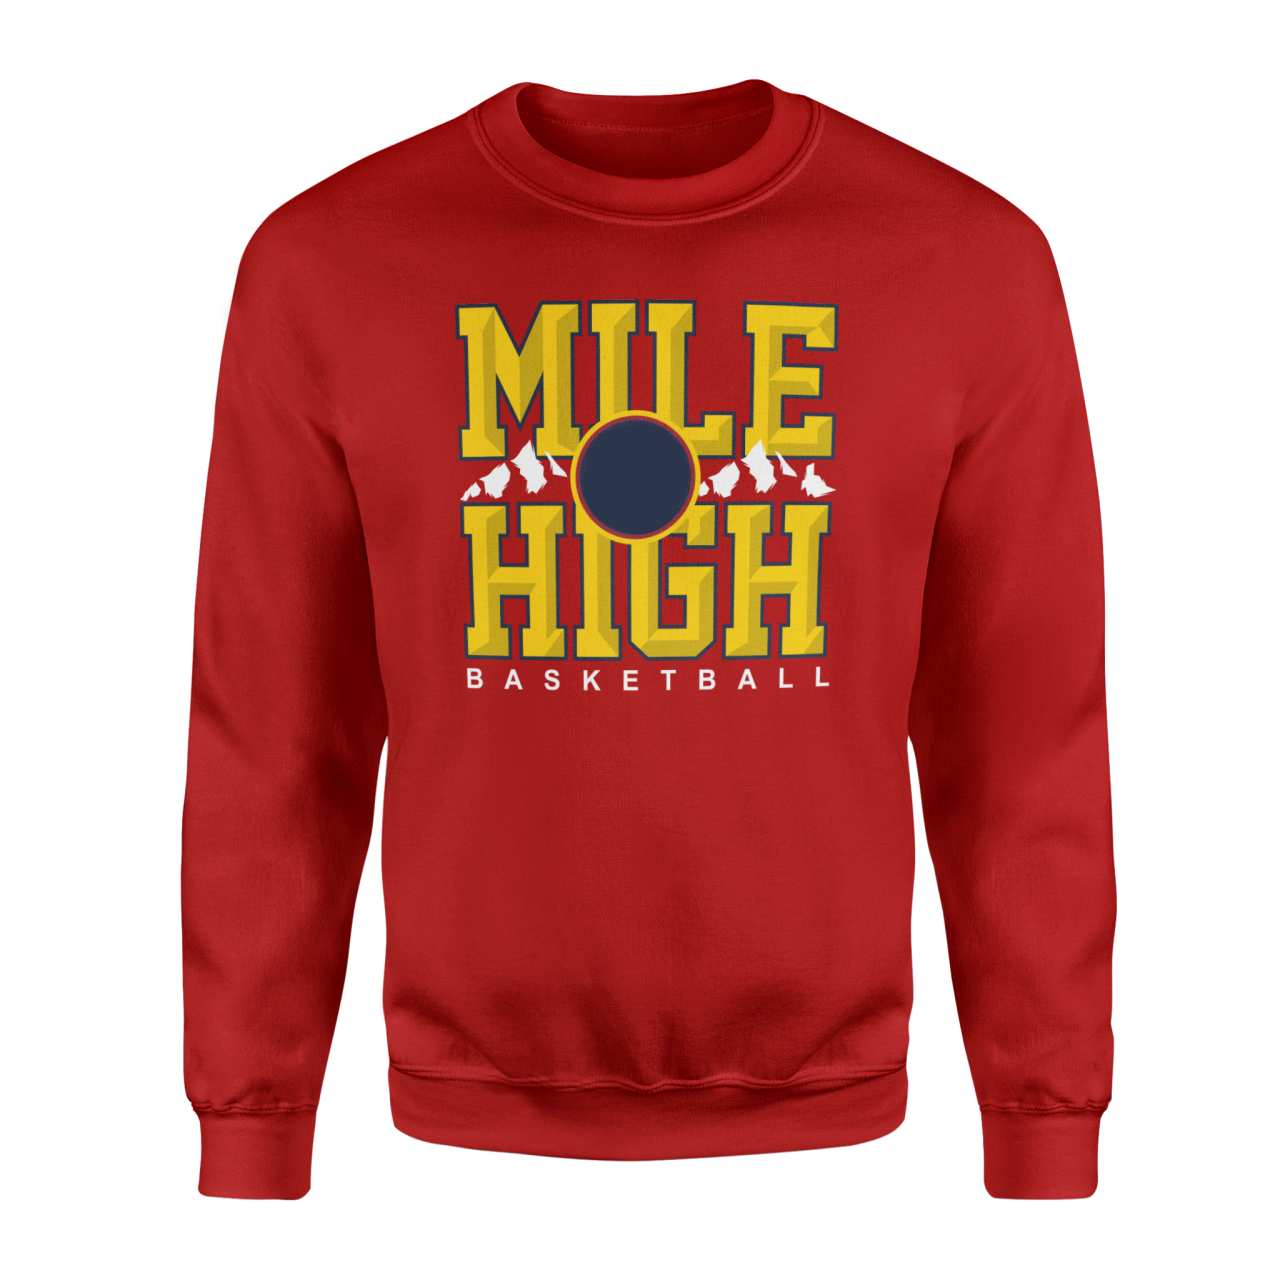 Mile High Basketball Kırmızı Sweatshirt